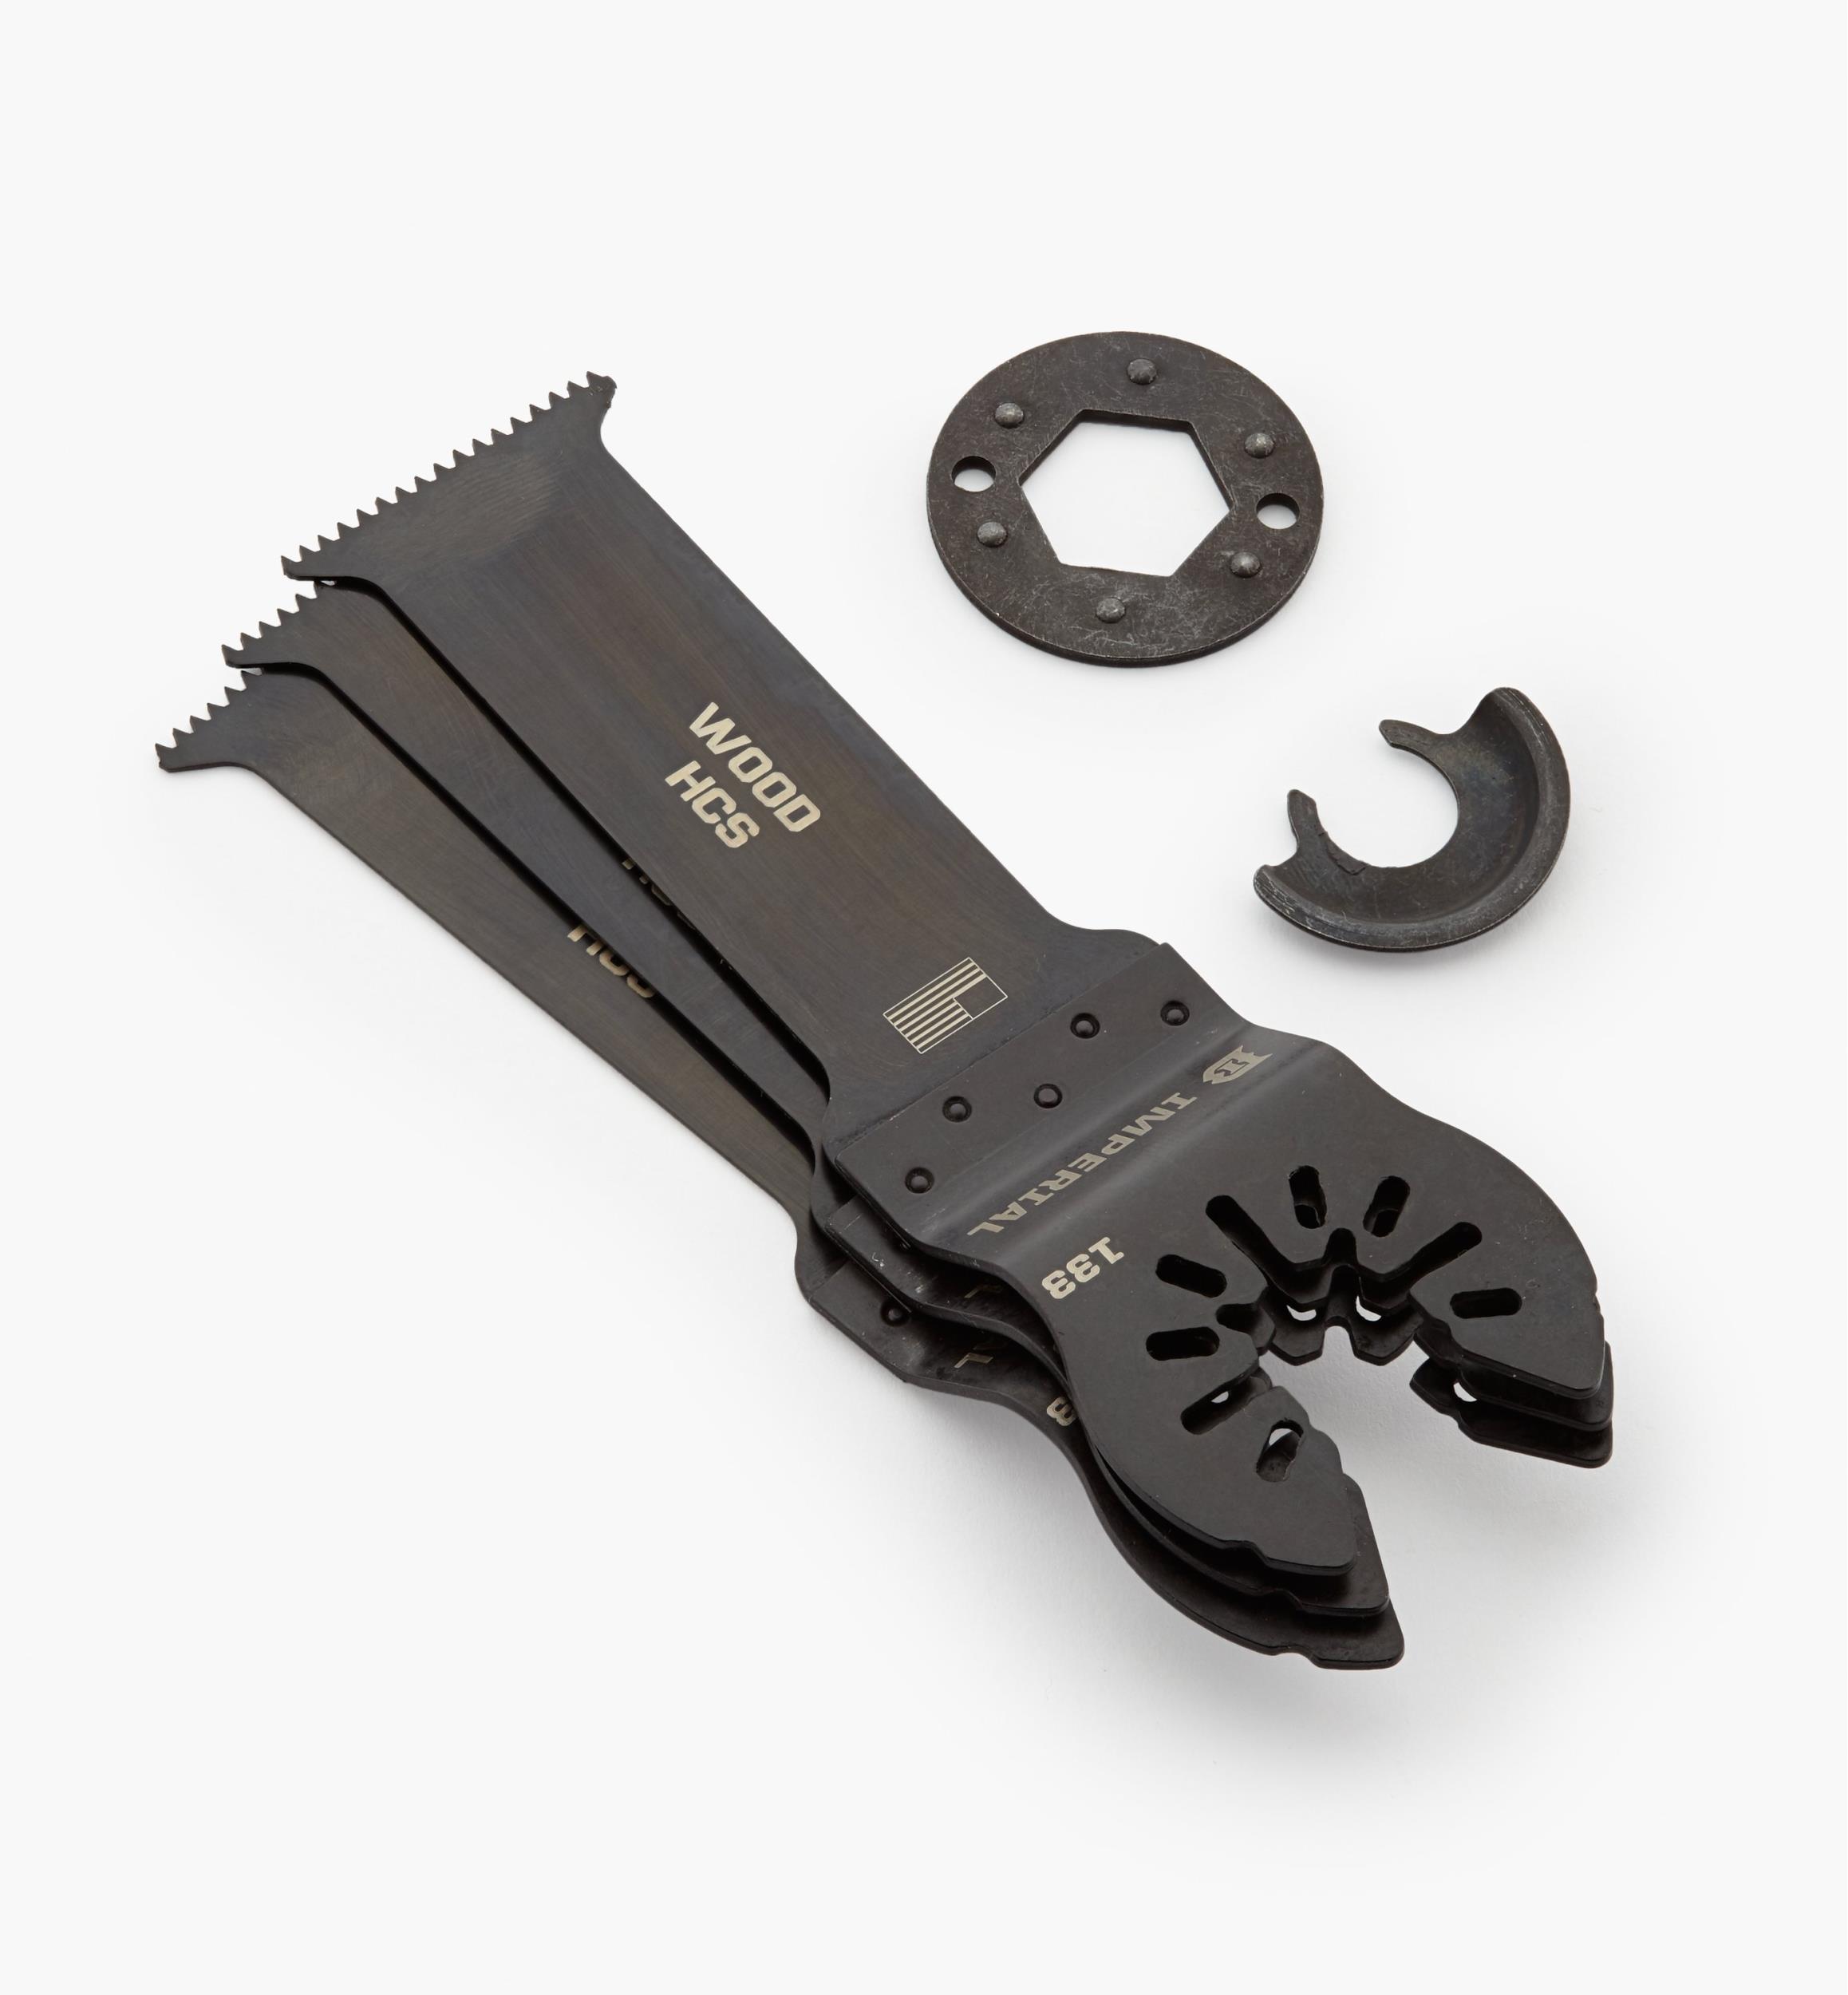 50pcs Oscillating Multi Tool Saw Blade Discs High Carbon Steel Cutter Tools Set 